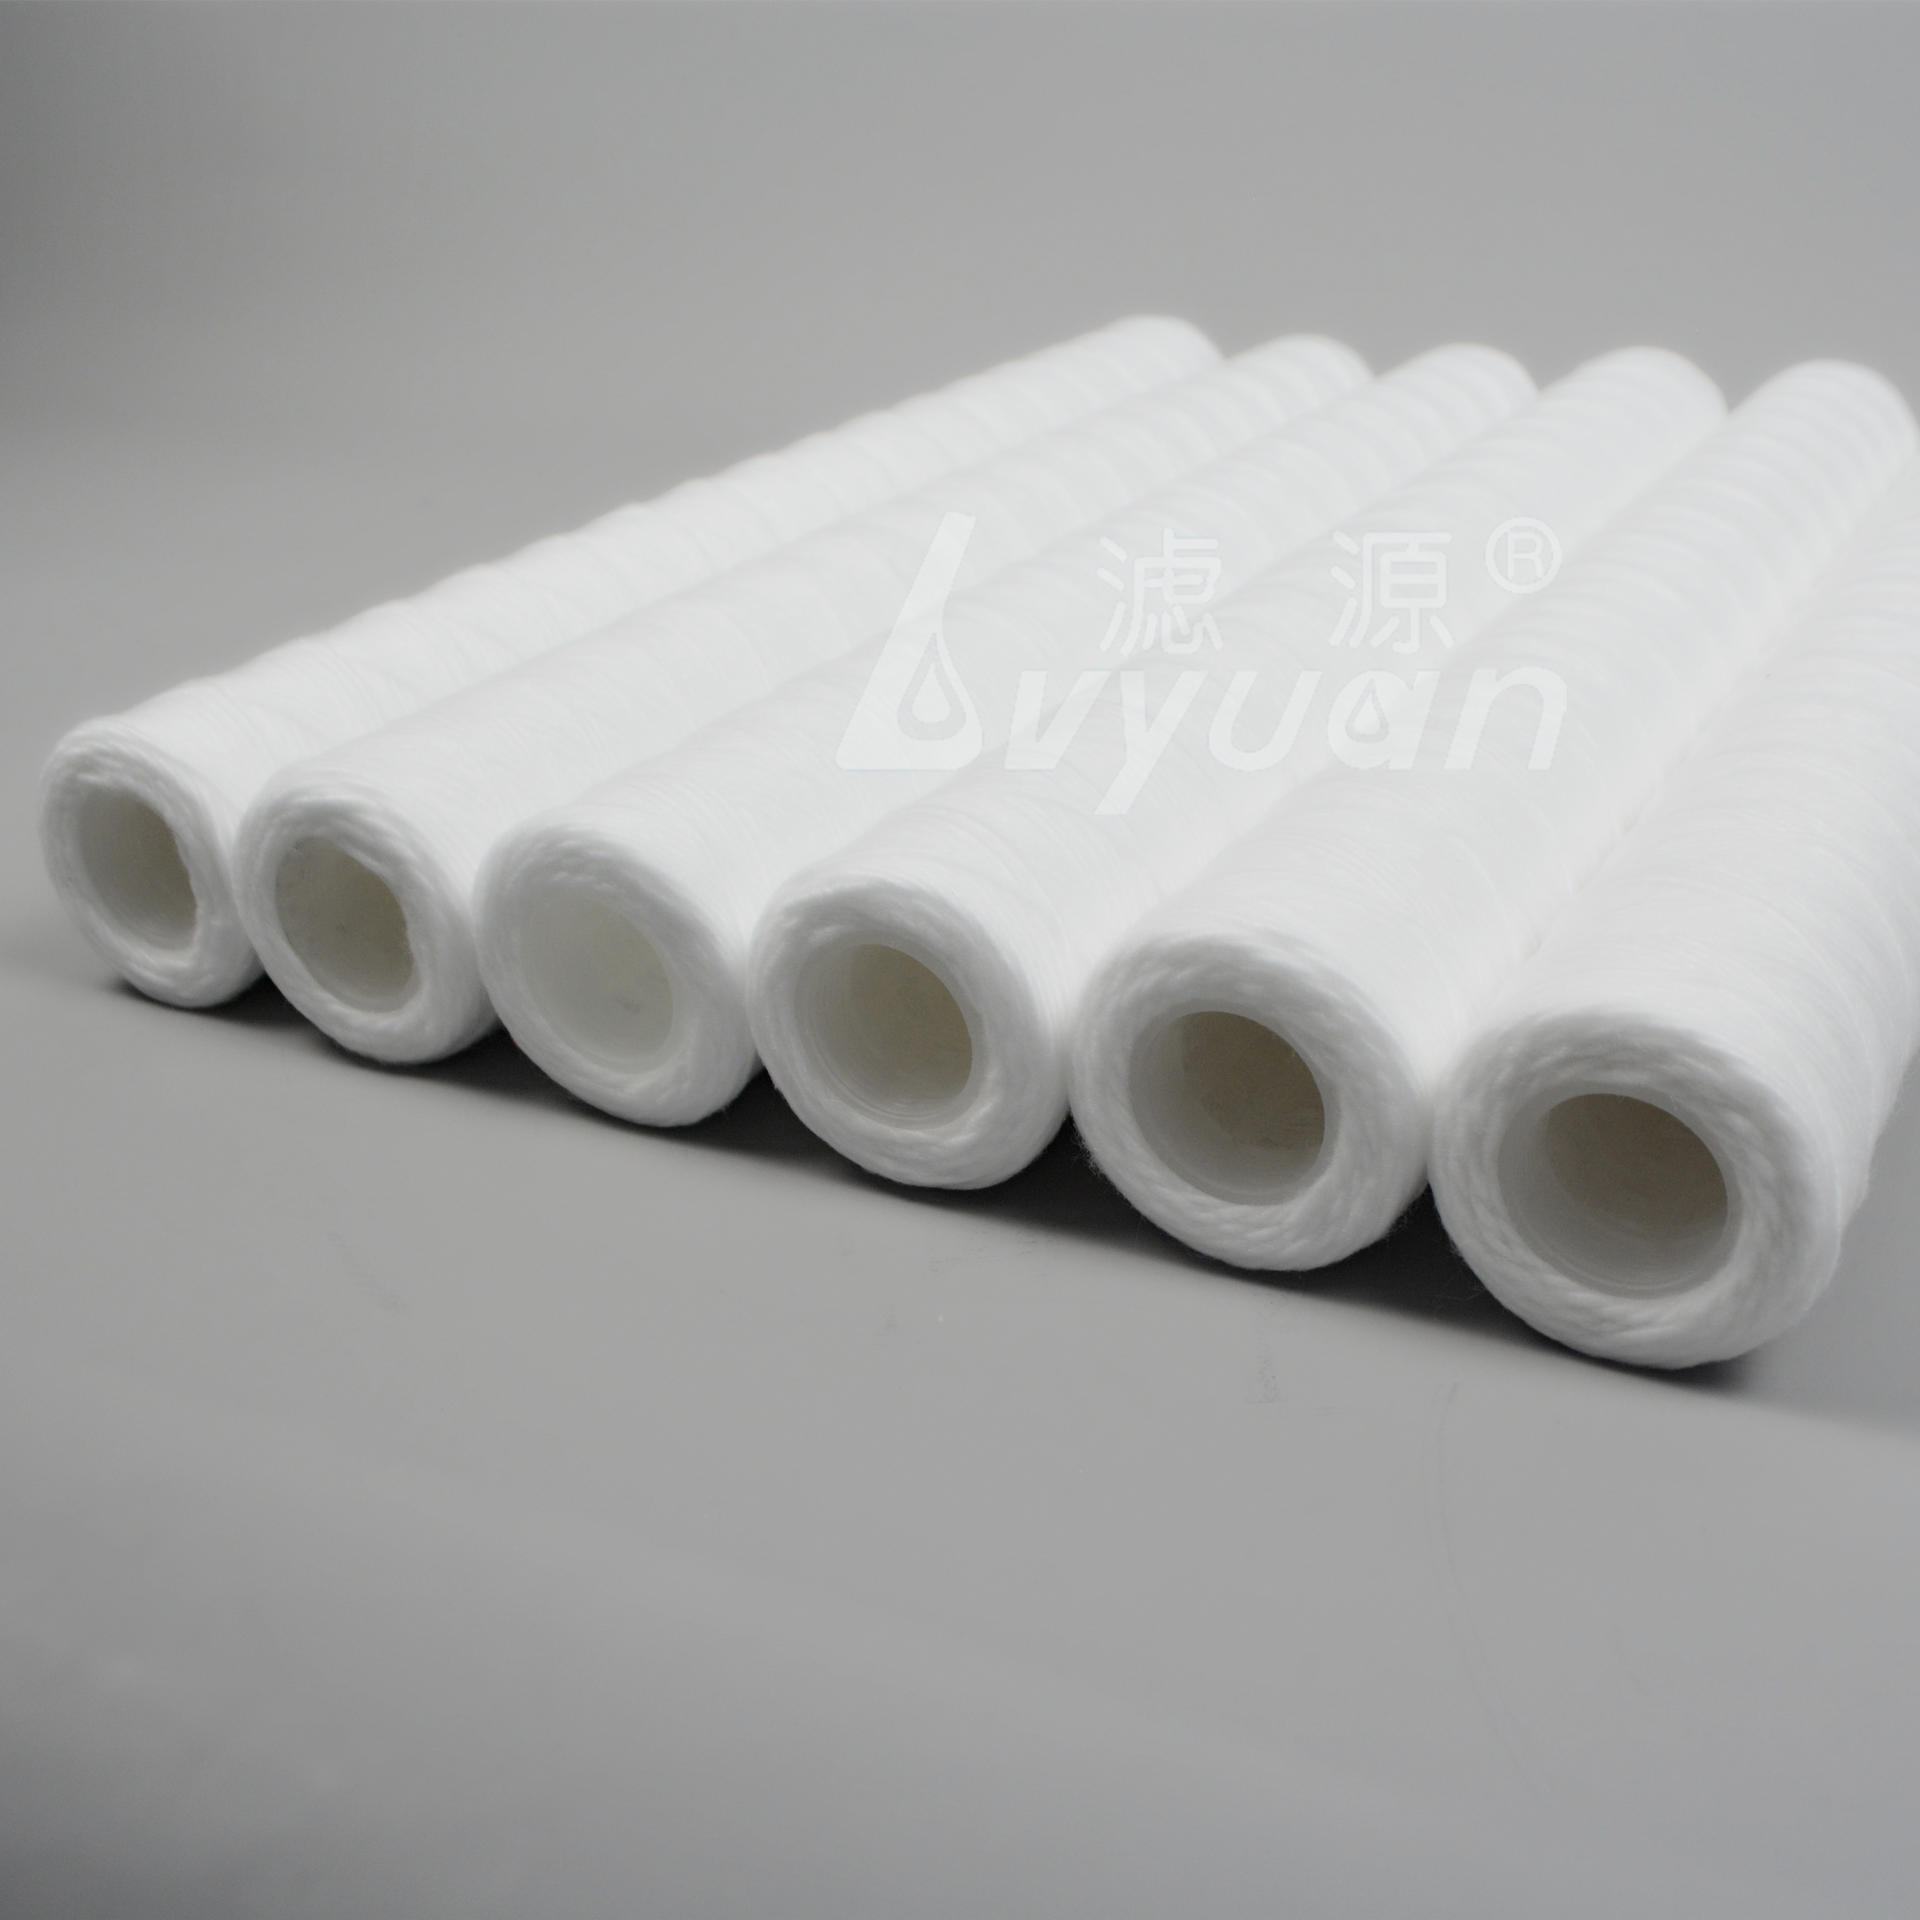 5 micron spun polypropylene water filter cartridge/string wound filter for juice/coffee filtration